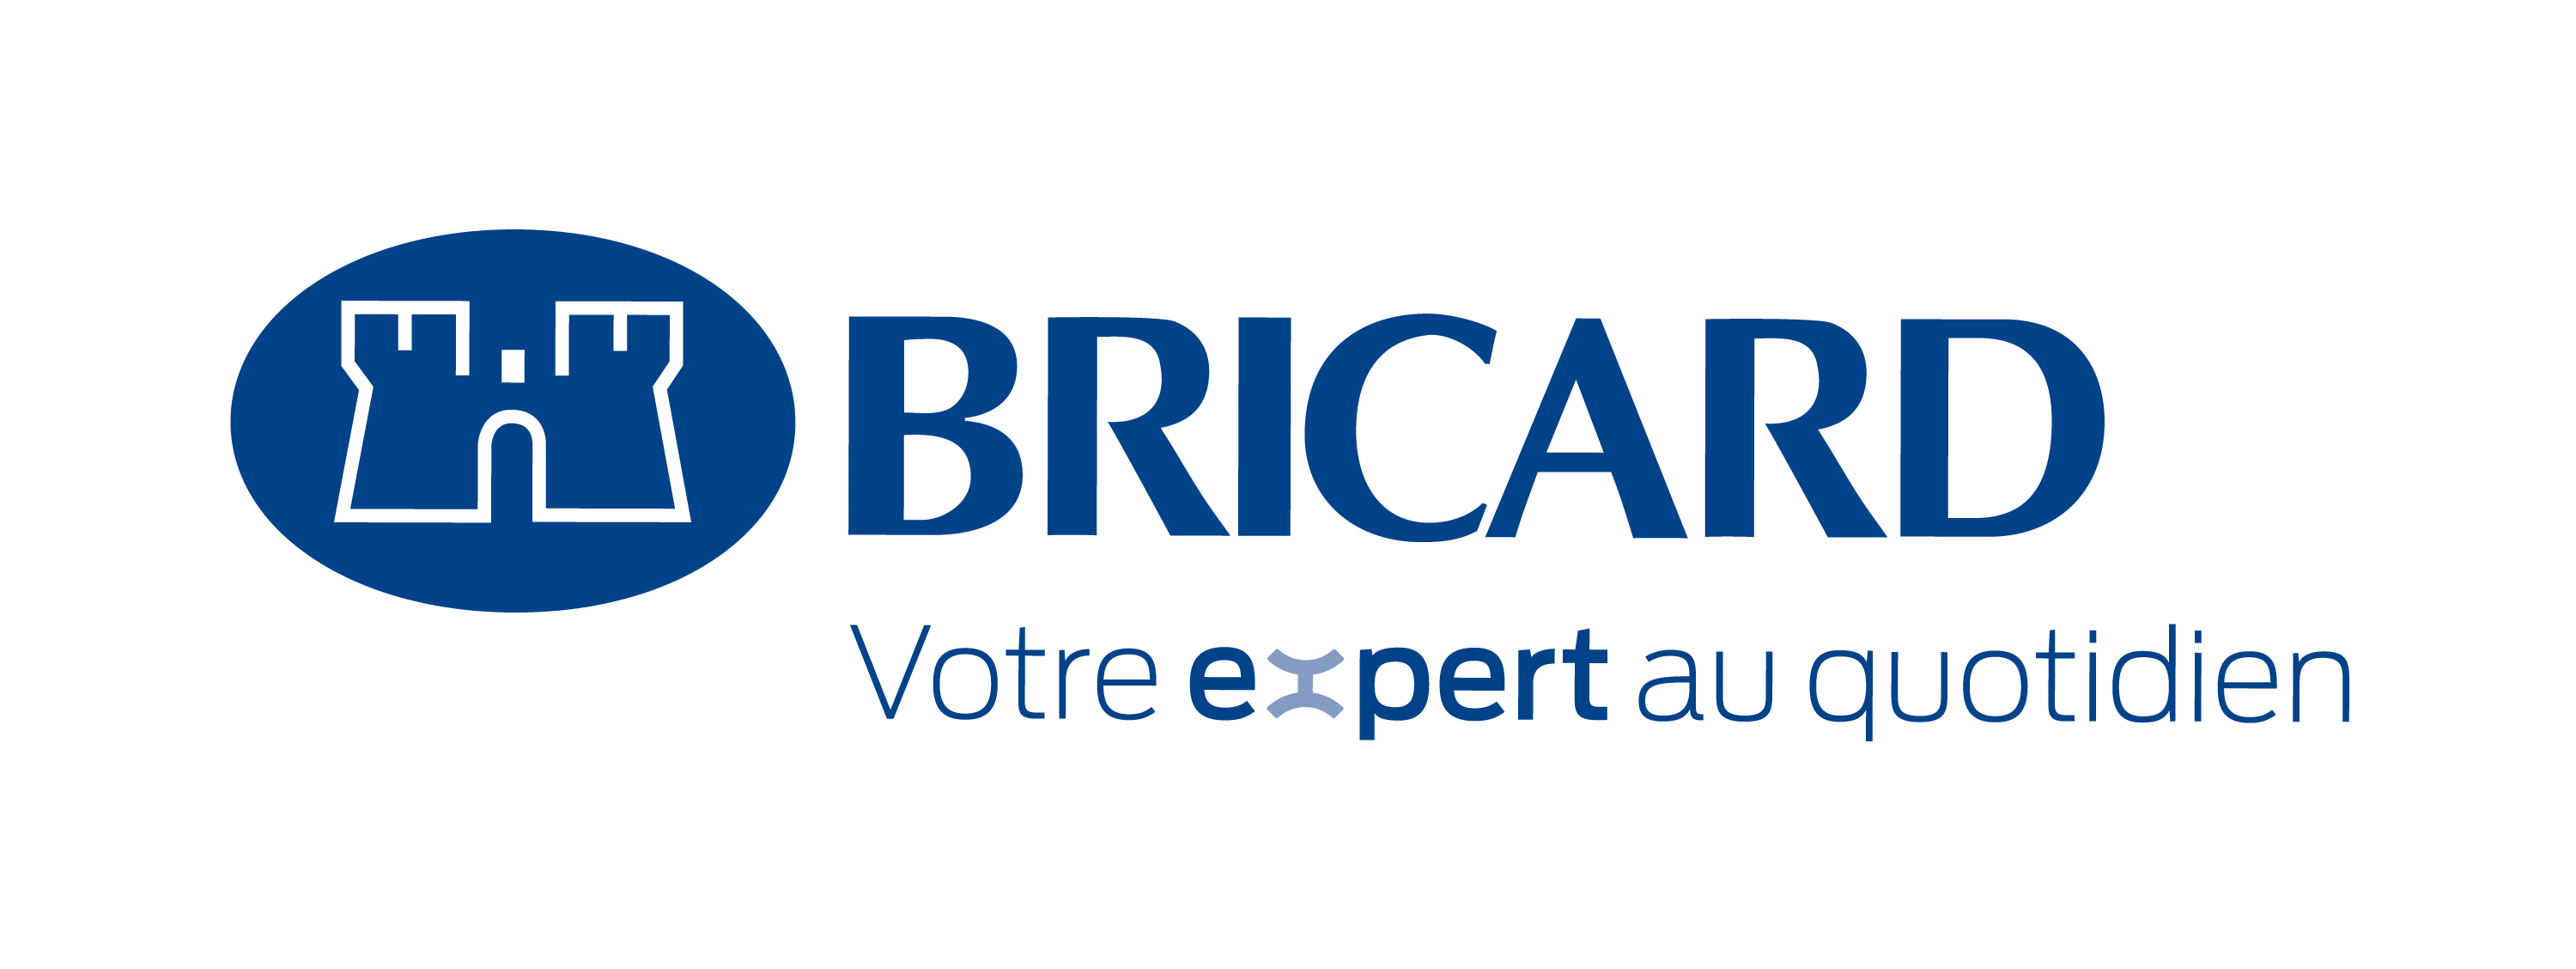 BRICARD SAS - Adopt1Alternant - Offres d'emploi en stage et alternance